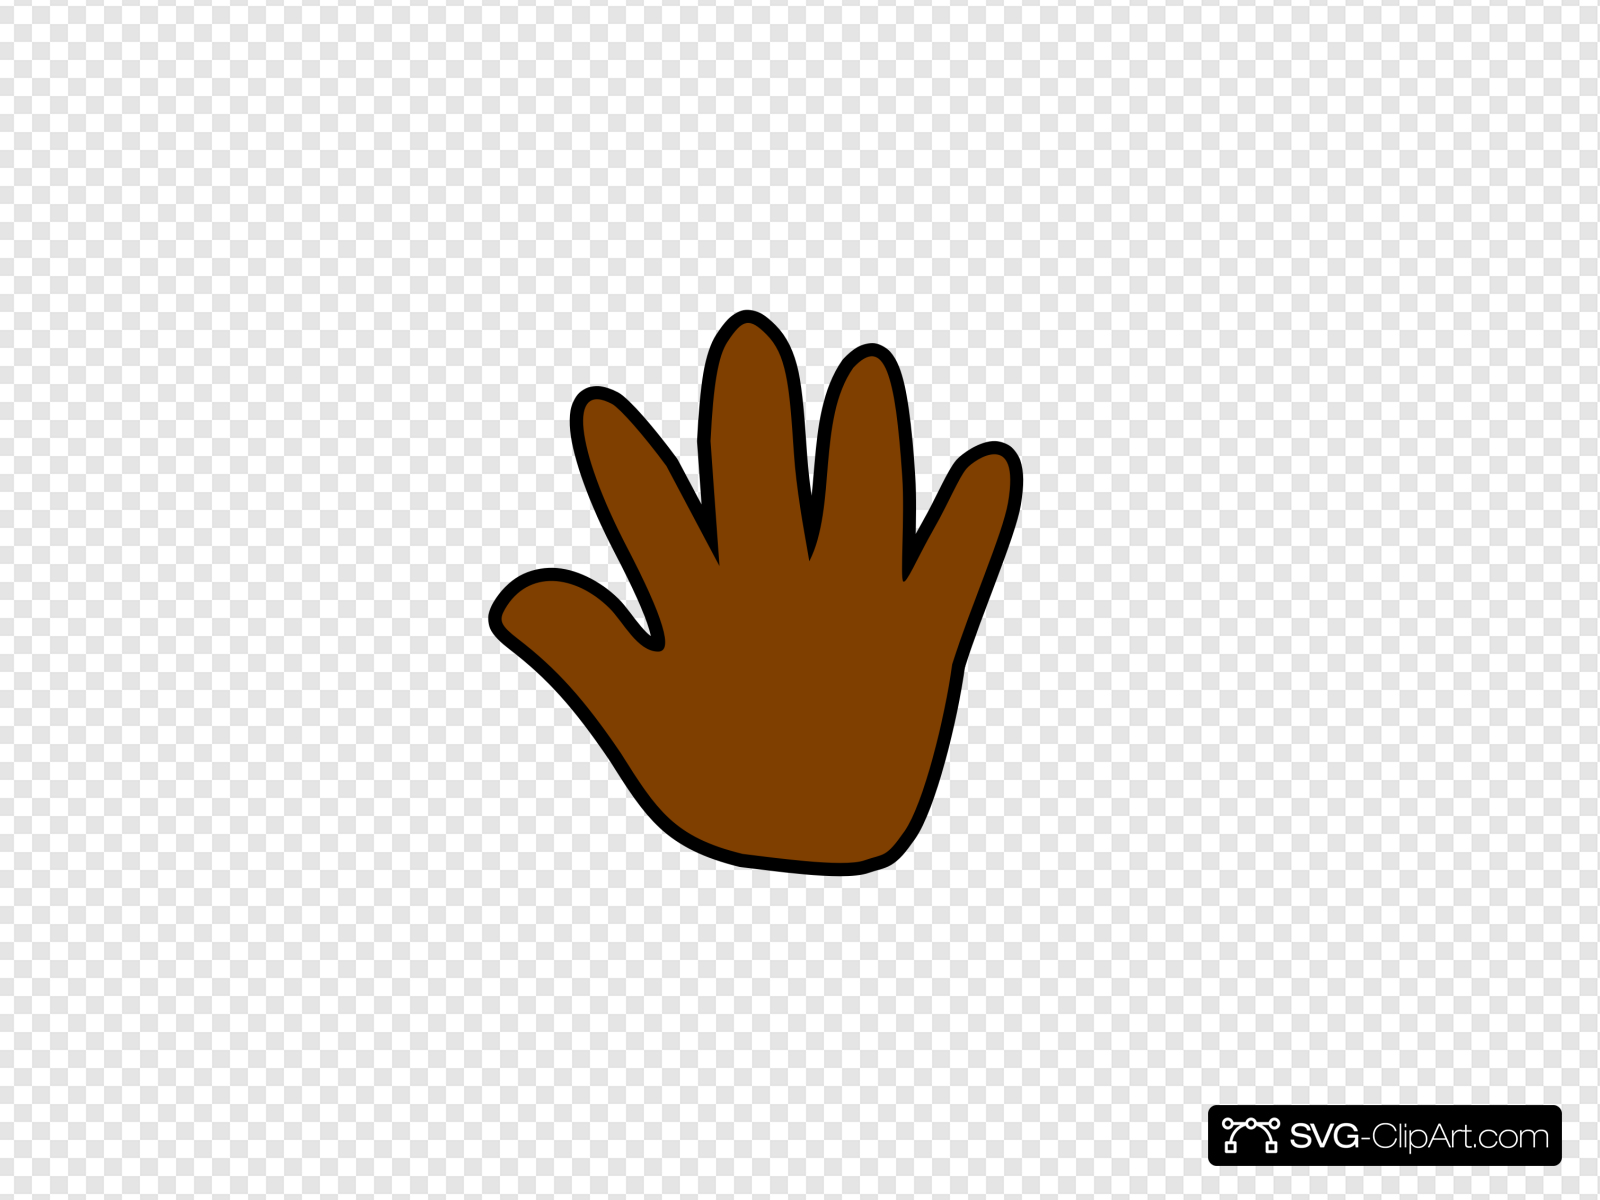 Dark Brown Handprint Clip art, Icon and SVG.